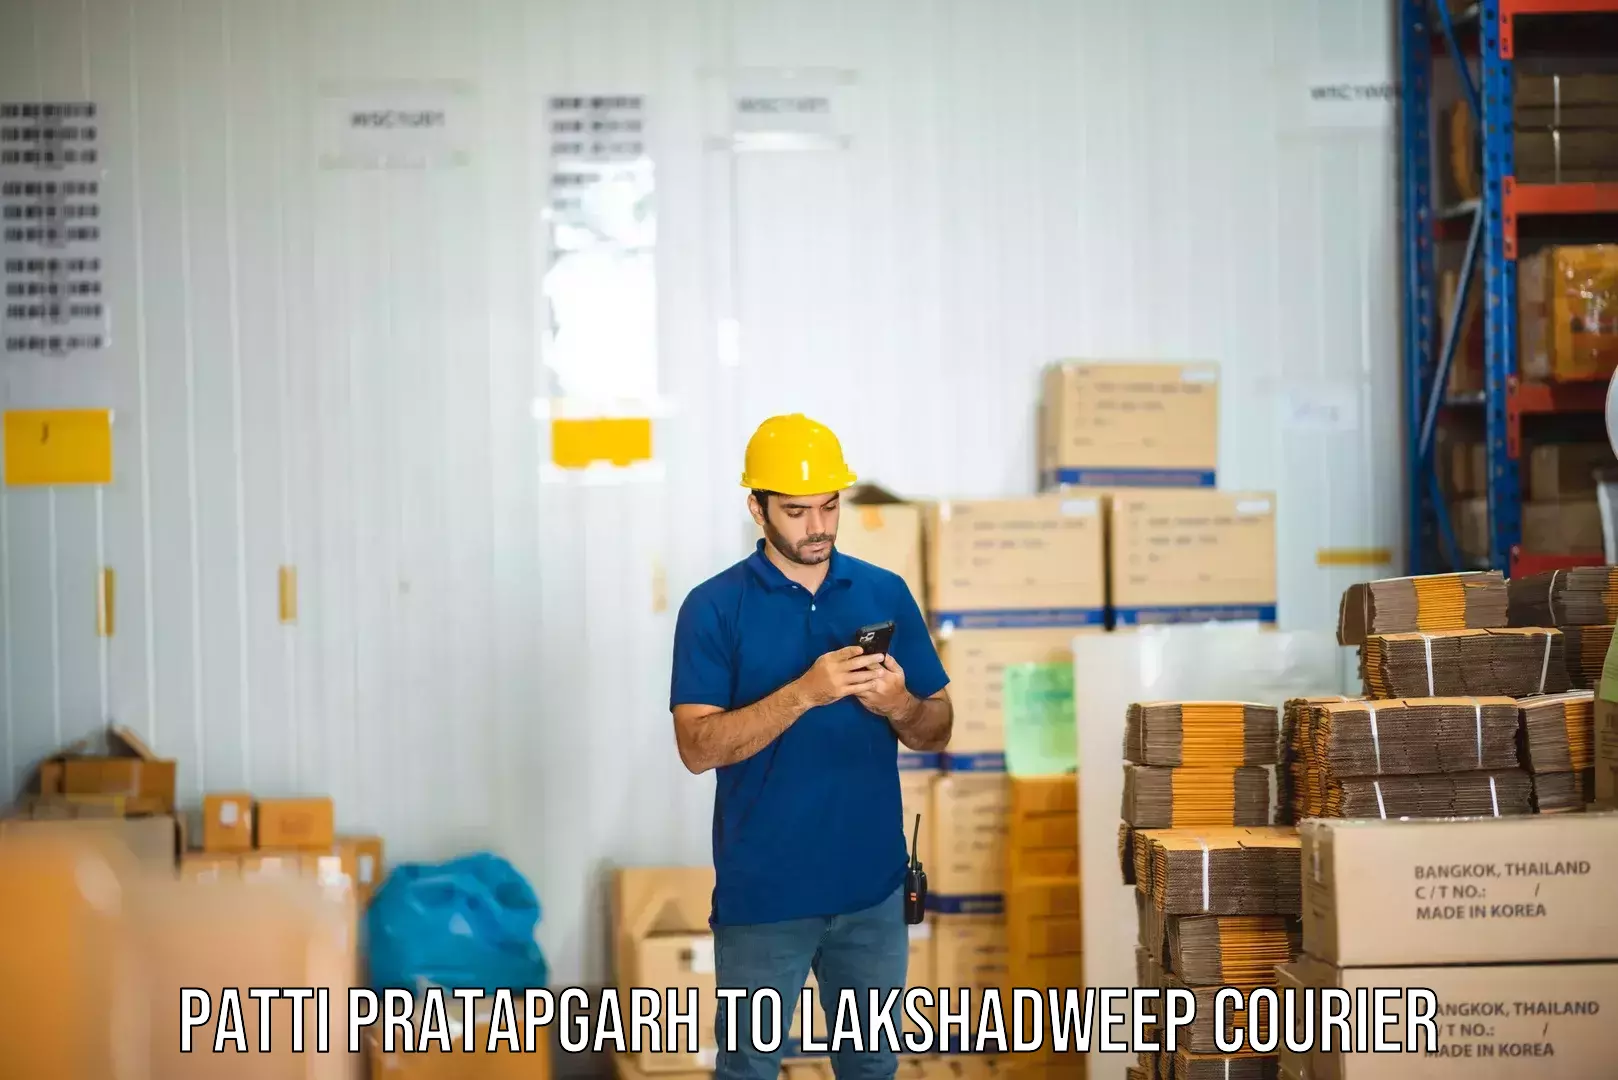 Flexible delivery schedules Patti Pratapgarh to Lakshadweep